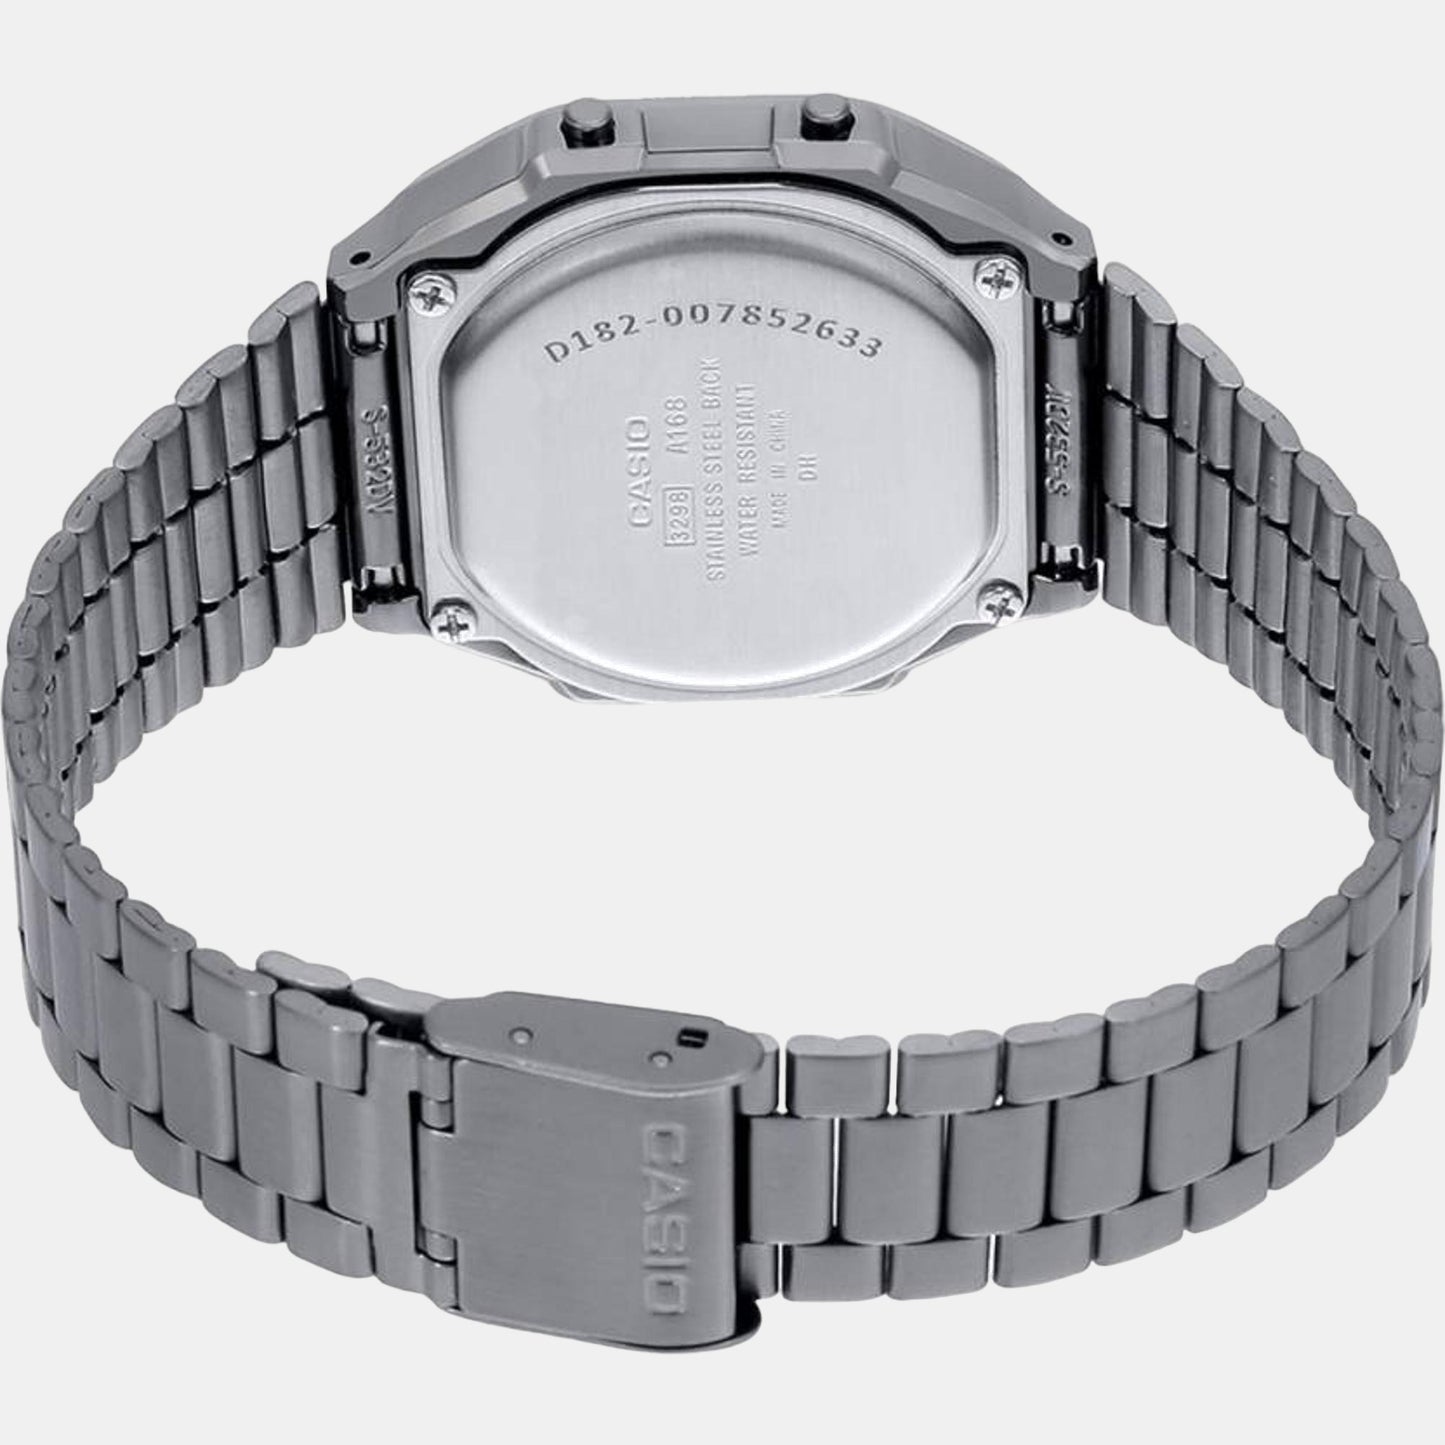 Unisex Digital Stainless Steel Watch D182